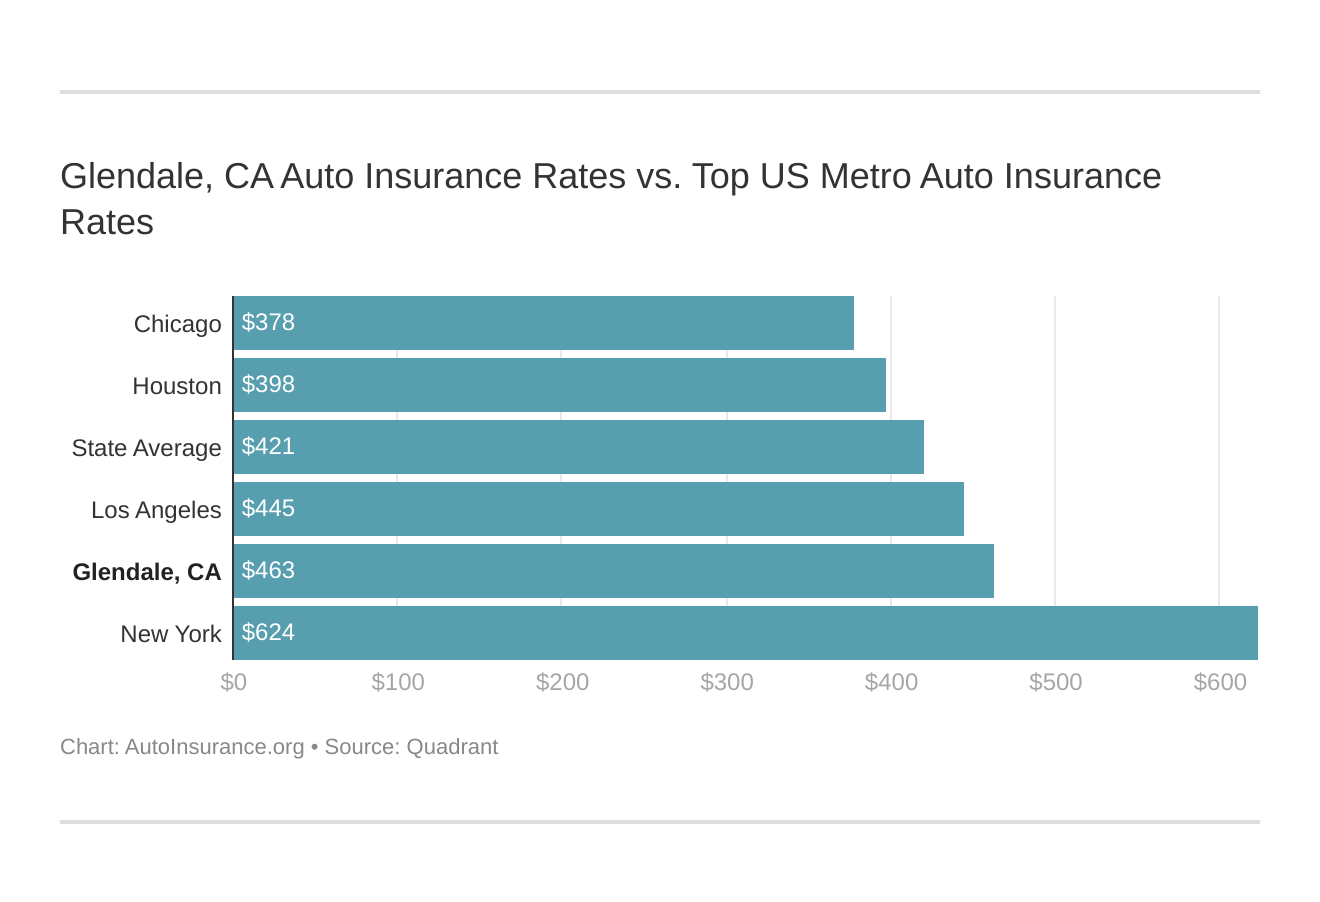 Glendale, CA Auto Insurance Rates vs. Top US Metro Auto Insurance Rates